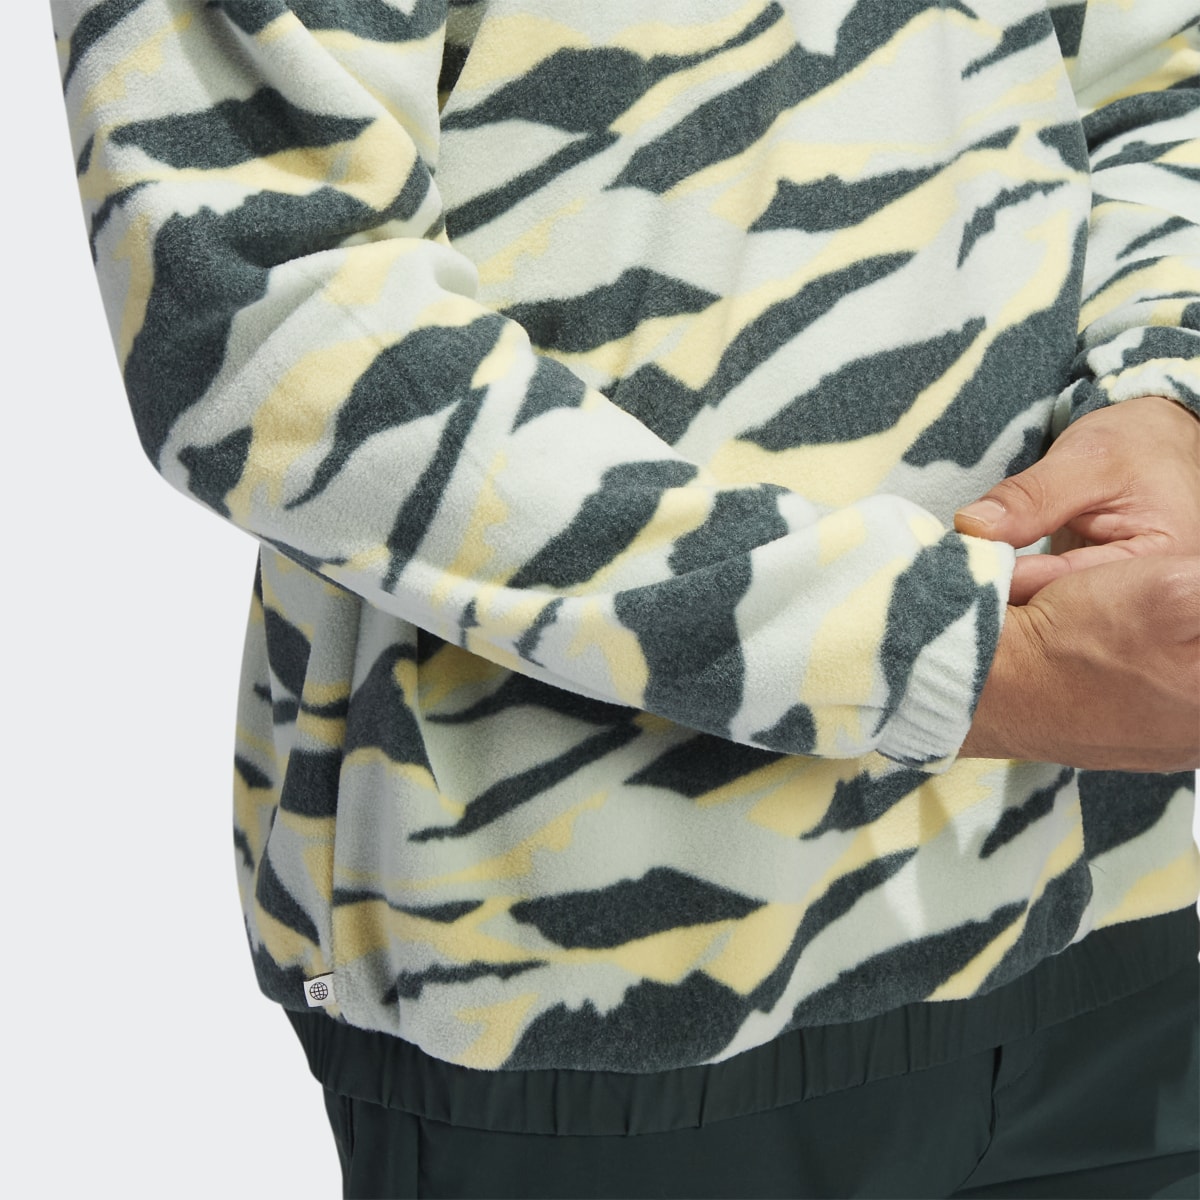 Adidas Texture-Print Crew Sweatshirt. 7